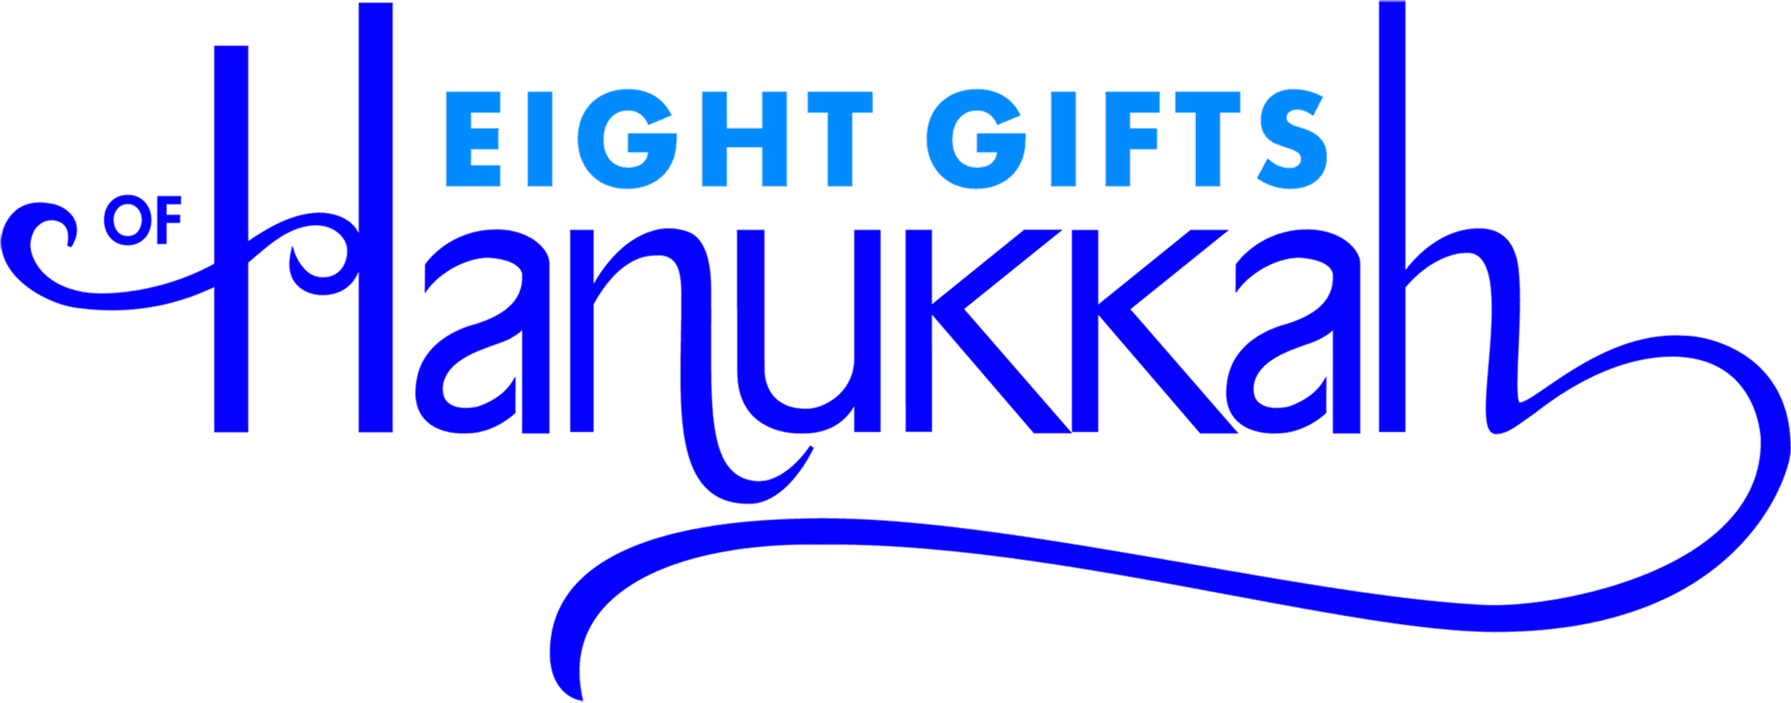 Eight Gifts of Hanukkah logo